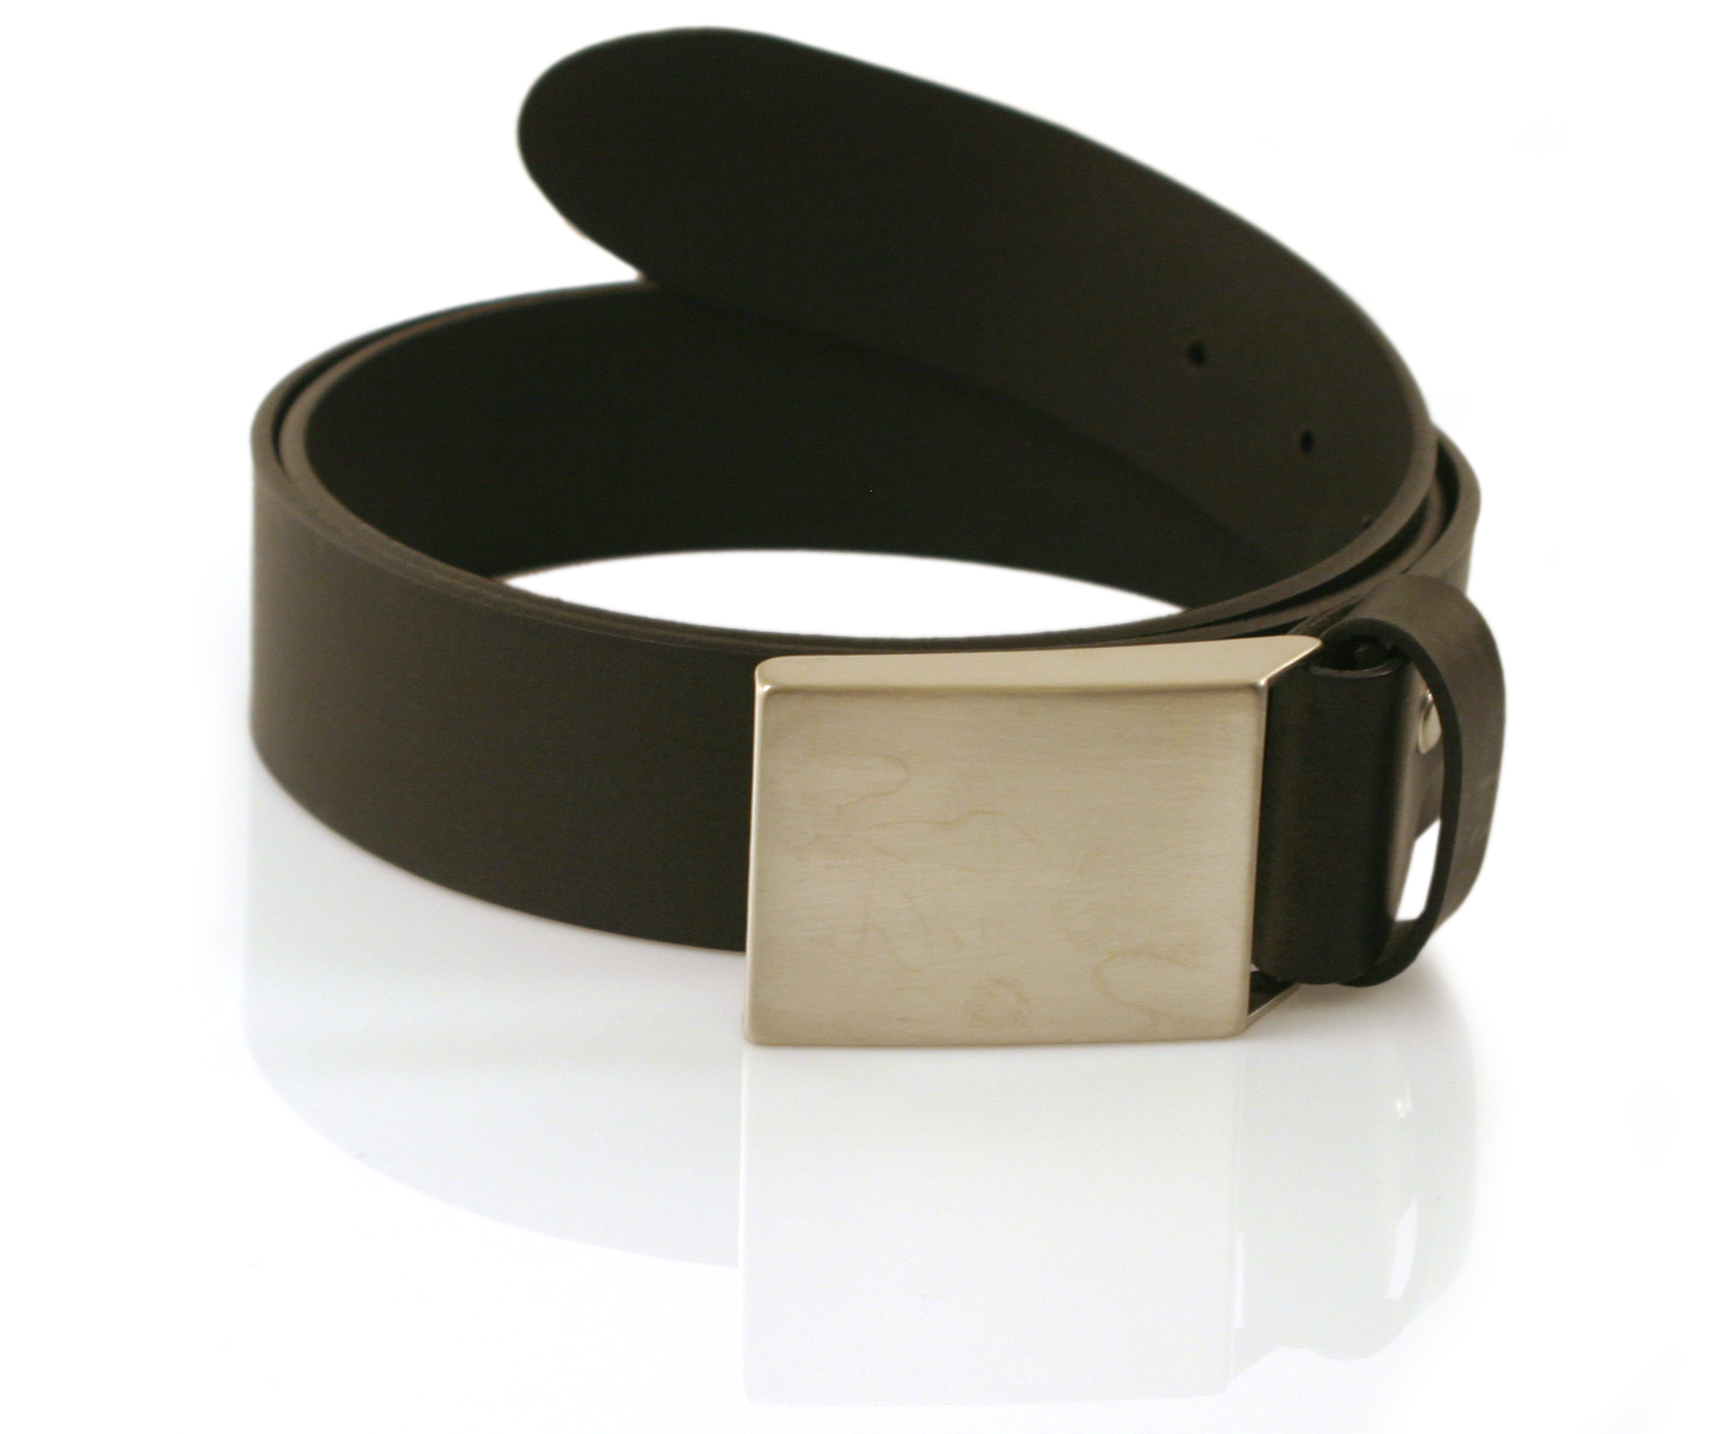 Fashion belt IB (black)